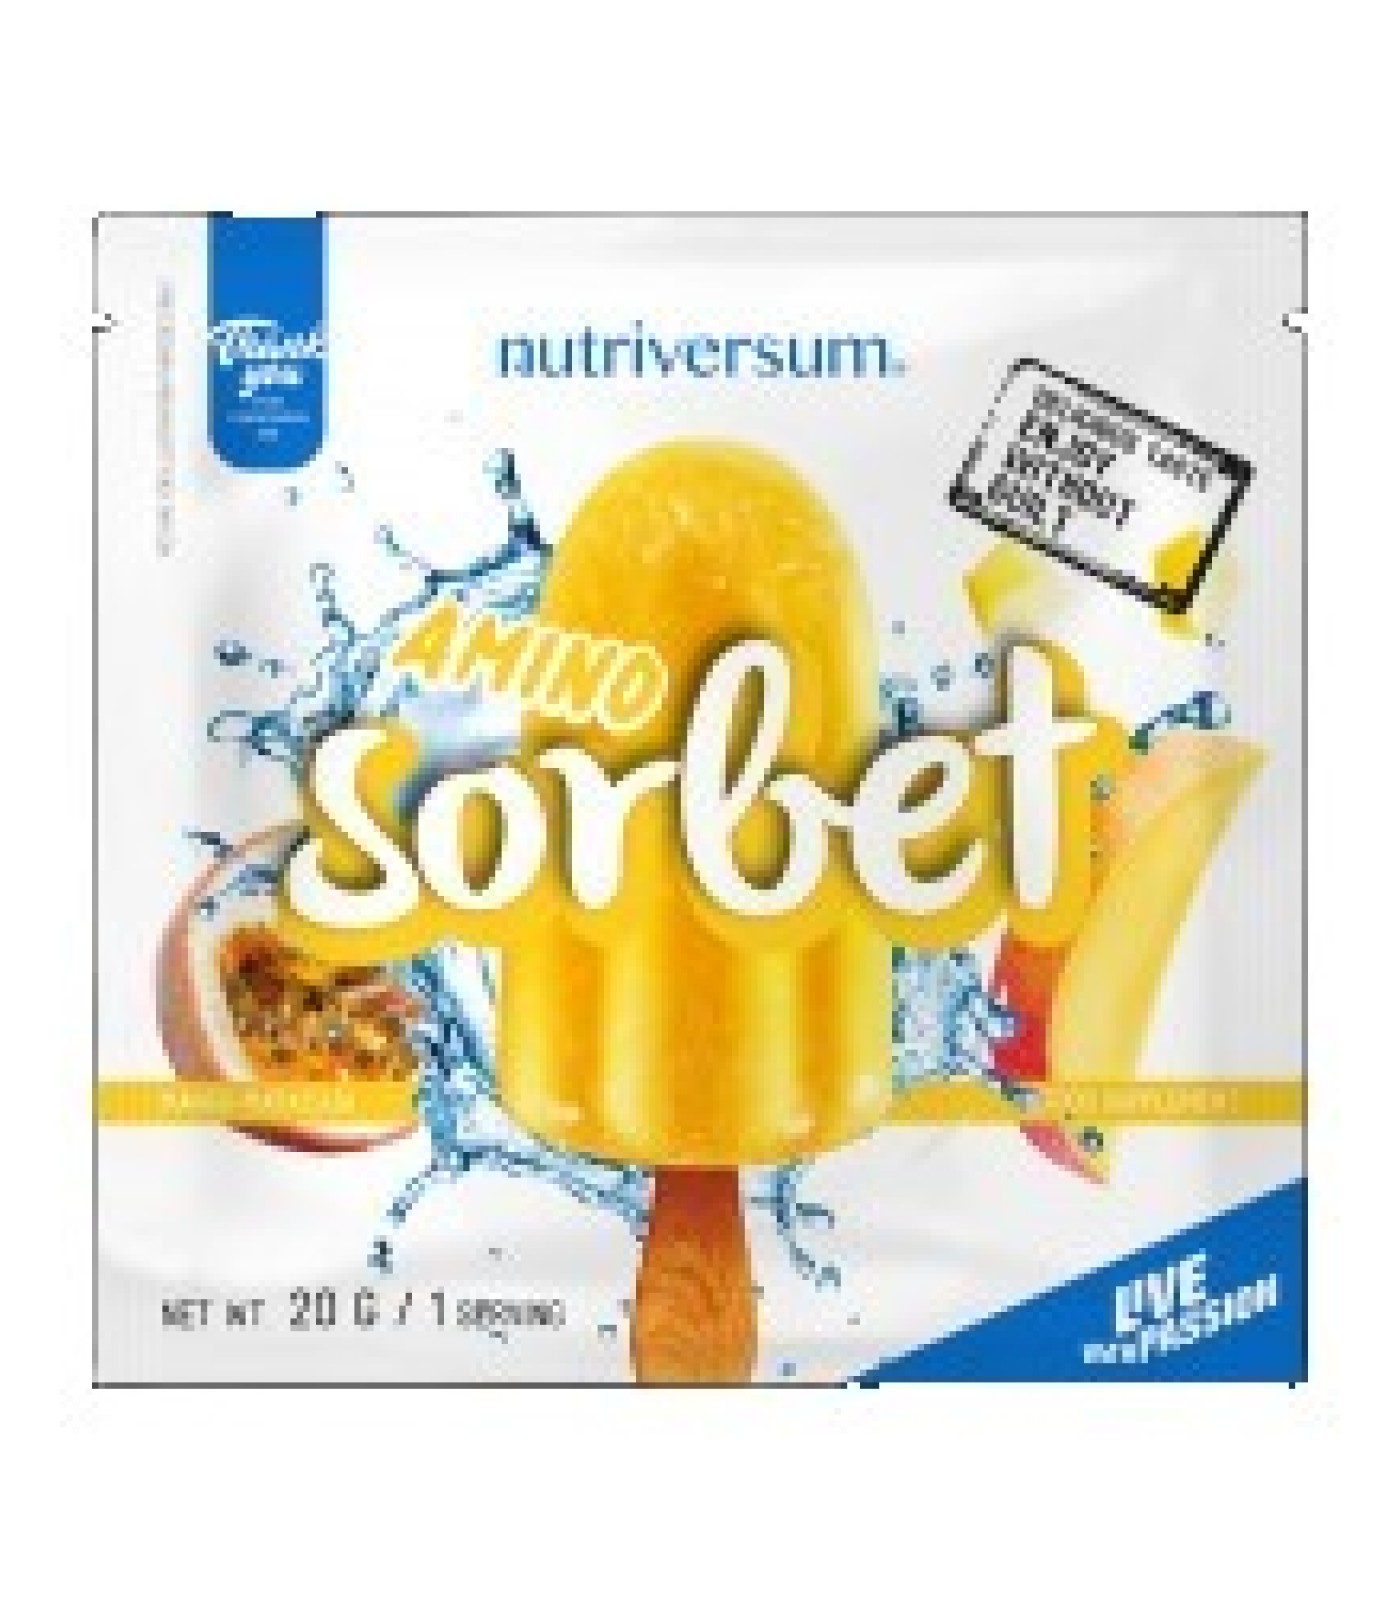 Nutriversum - Amino Sorbet | Ready-to-Freeze Amino Ice Cream / 20 gr.